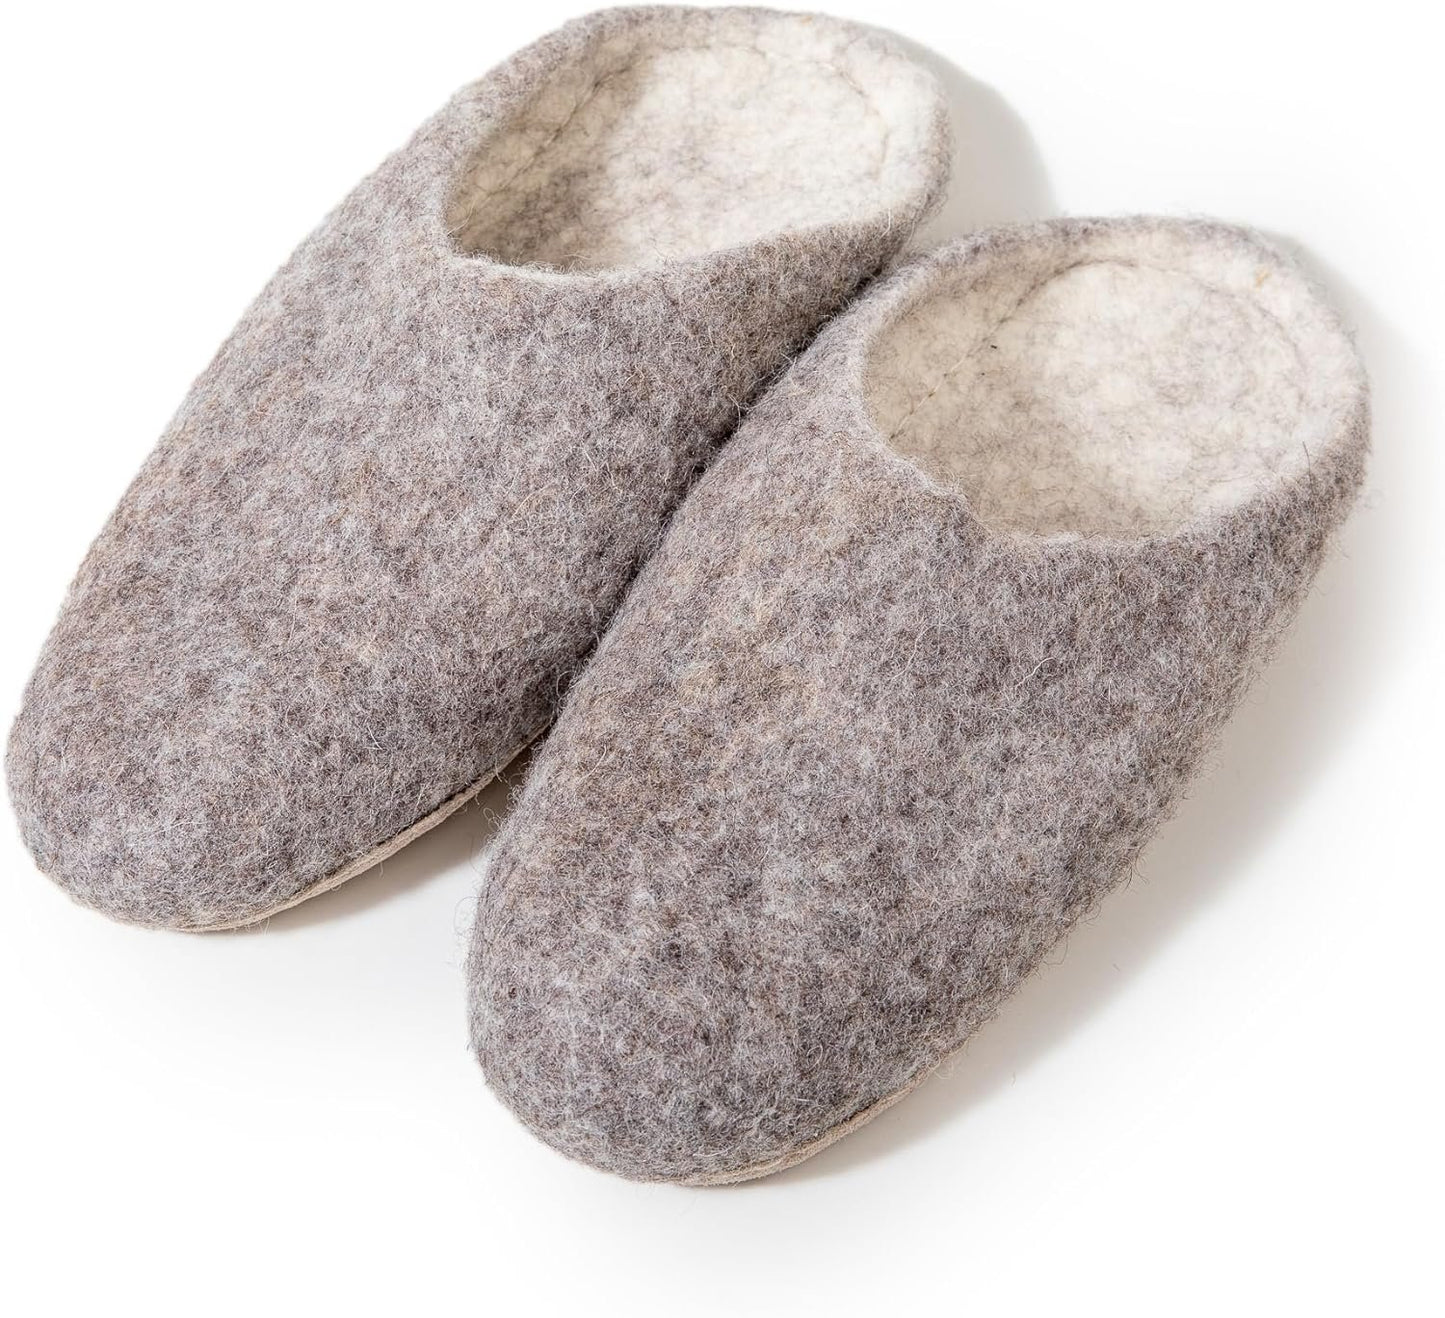 Woolygon Unisex Wool Clogs Indoor Slippers - Mules Sandals for Men Women, Warm Slip-On Soft Comfy Sheepskin Loafers Lightweight Footwear